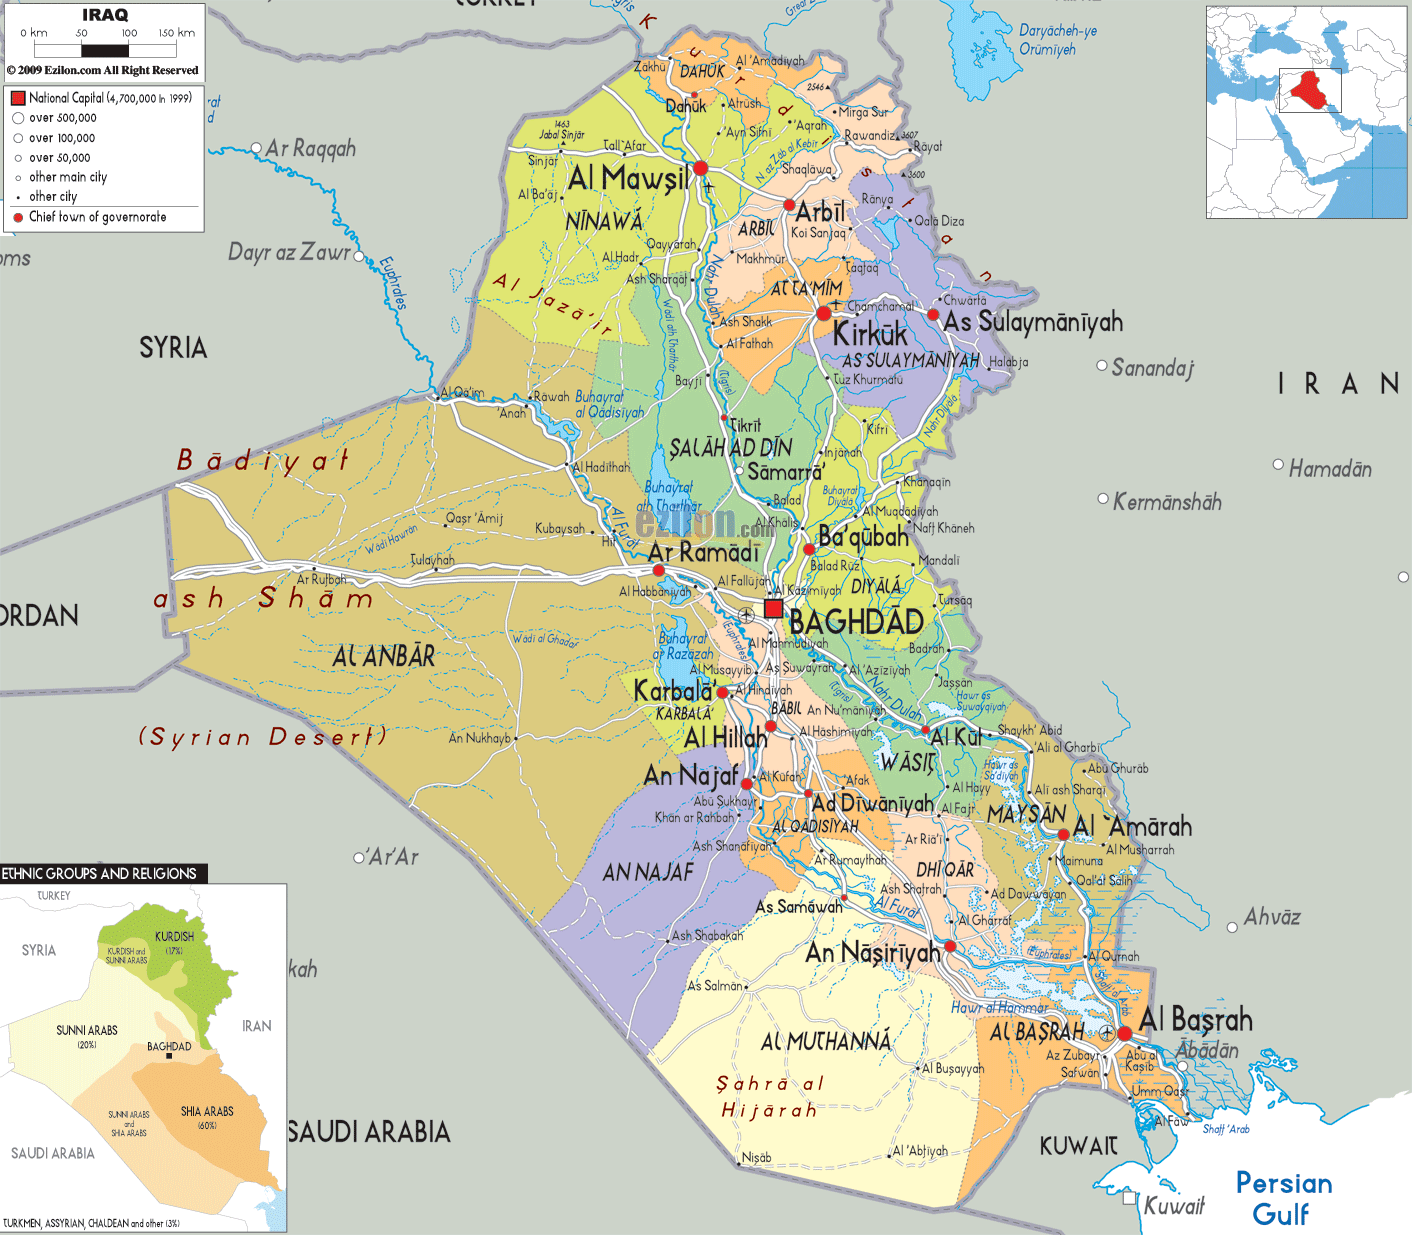 http://www.ezilon.com/maps/images/asia/political-map-of-Iraq.gif